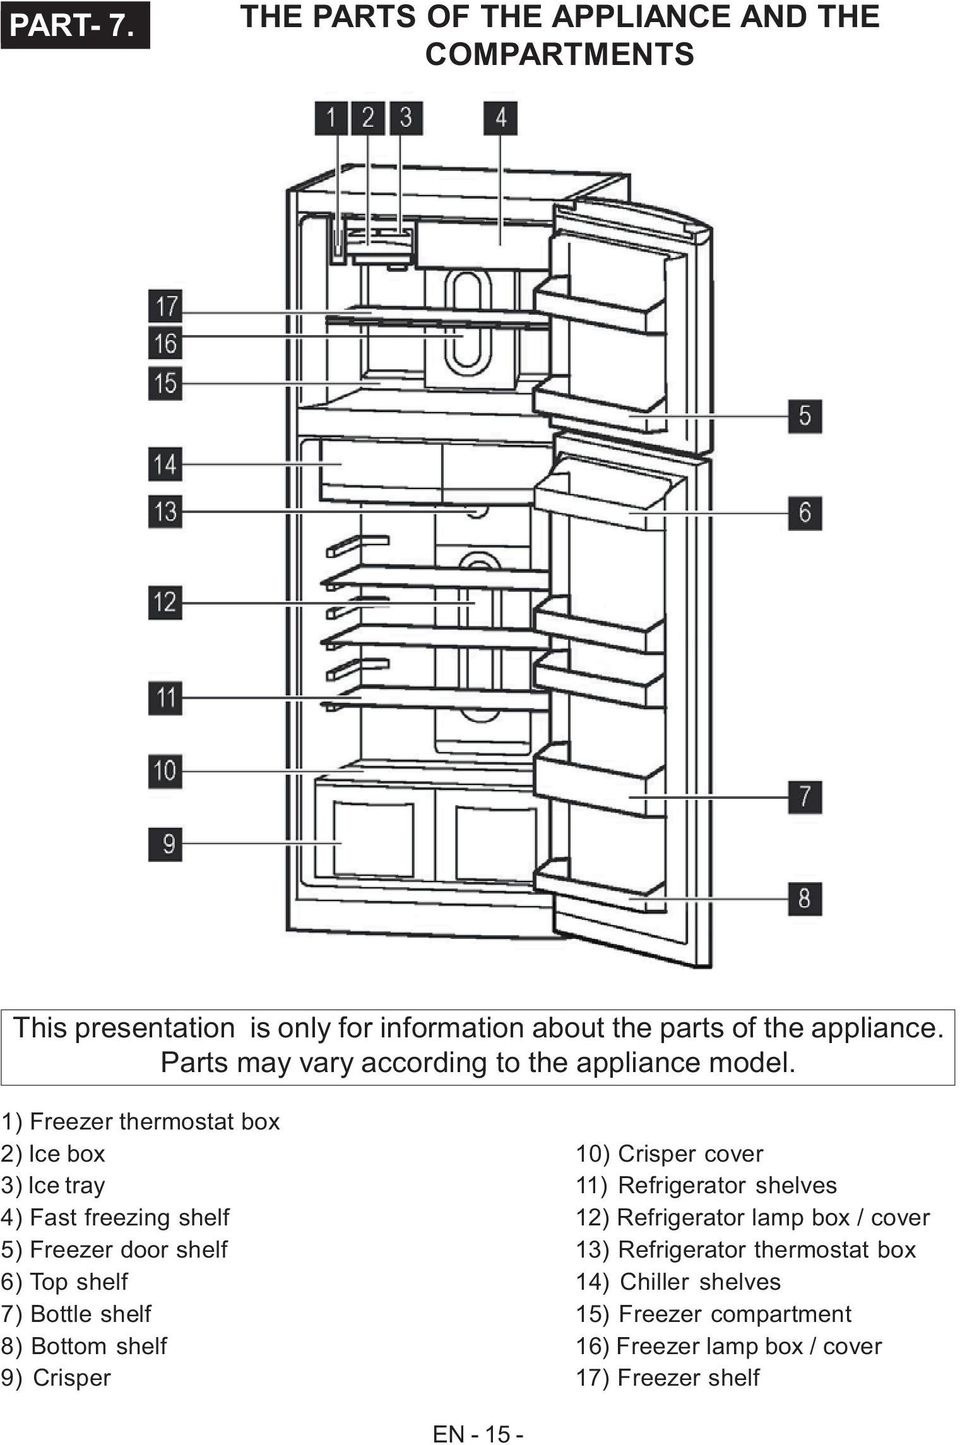 1) Freezer thermostat box 2) Ice box 3) Ice tray 4) Fast freezing shelf 5) Freezer door shelf 6) Top shelf 7) Bottle shelf 8) Bottom